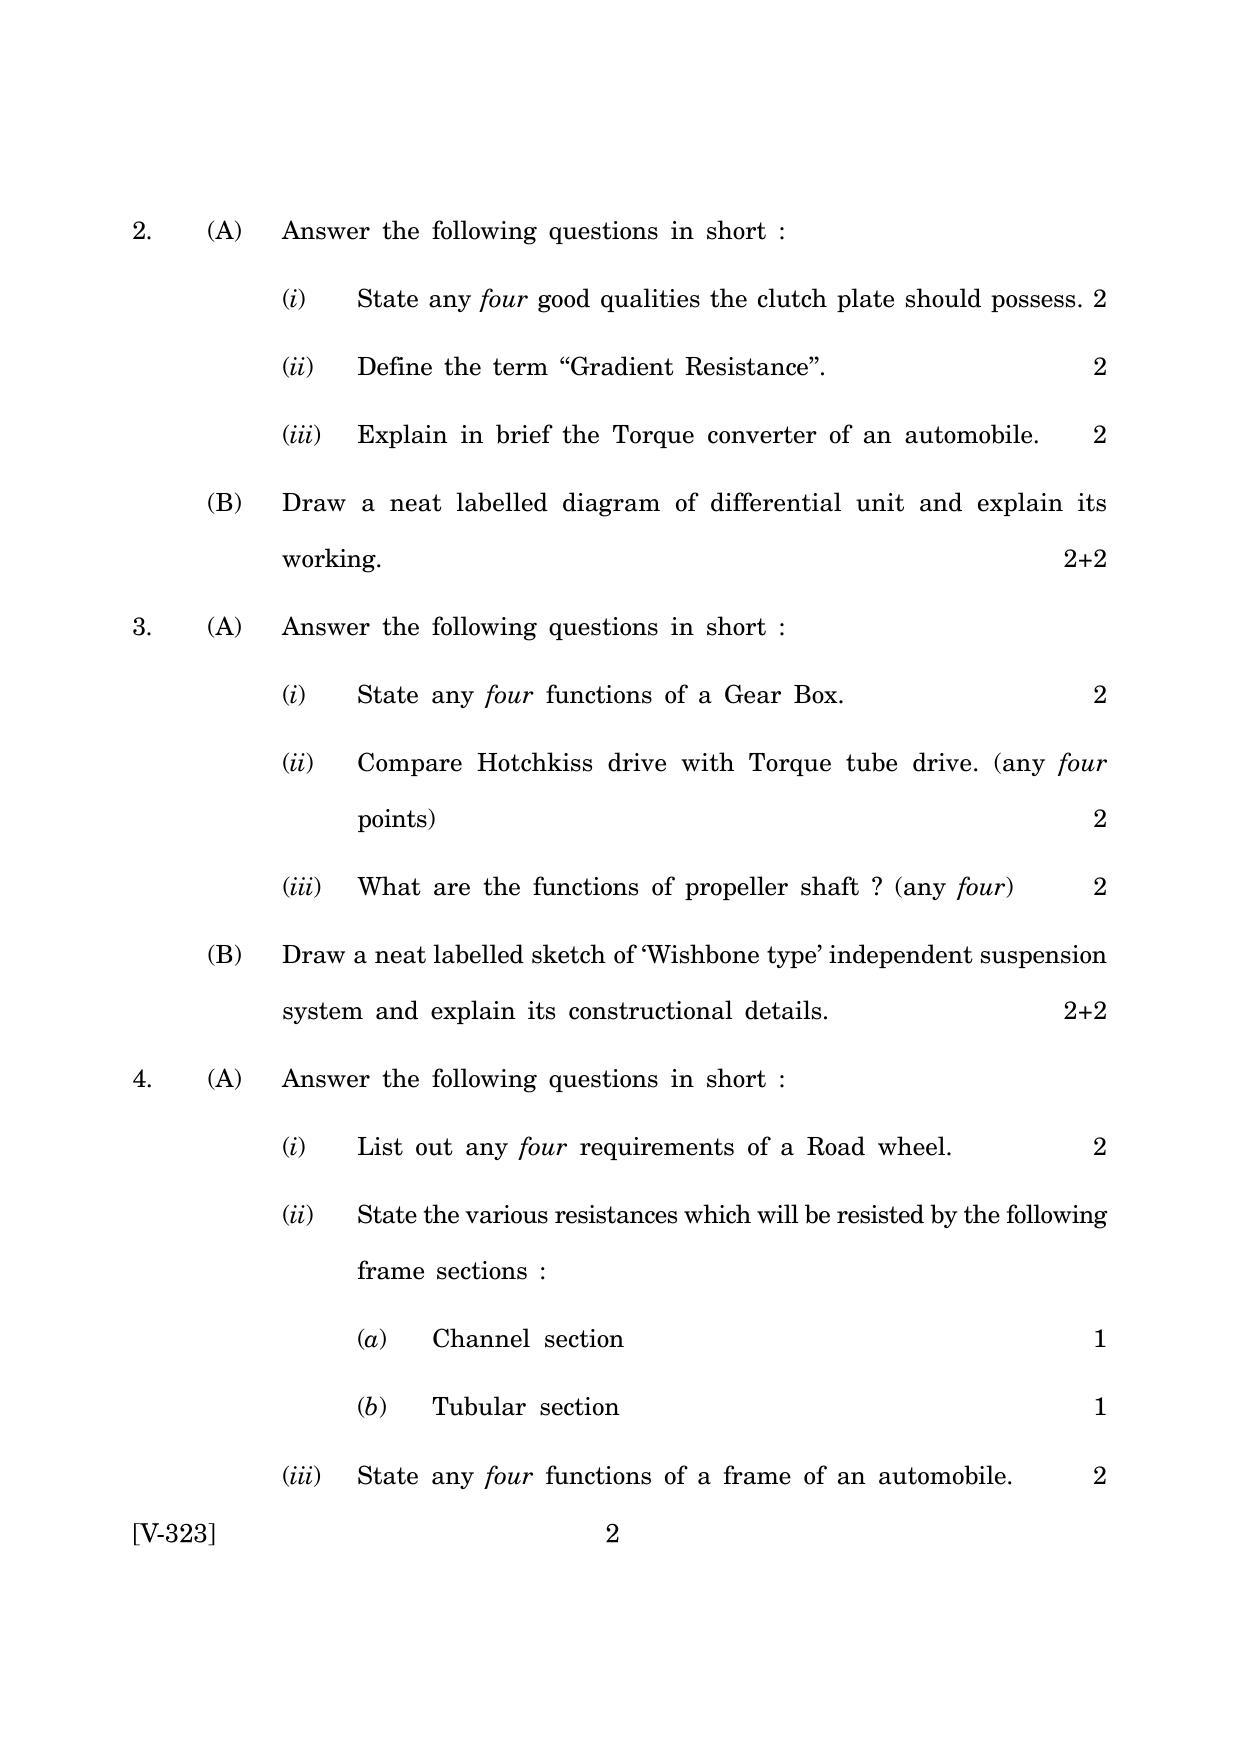 Goa Board Class 12 Auto - Transmission   (March 2019) Question Paper - Page 2